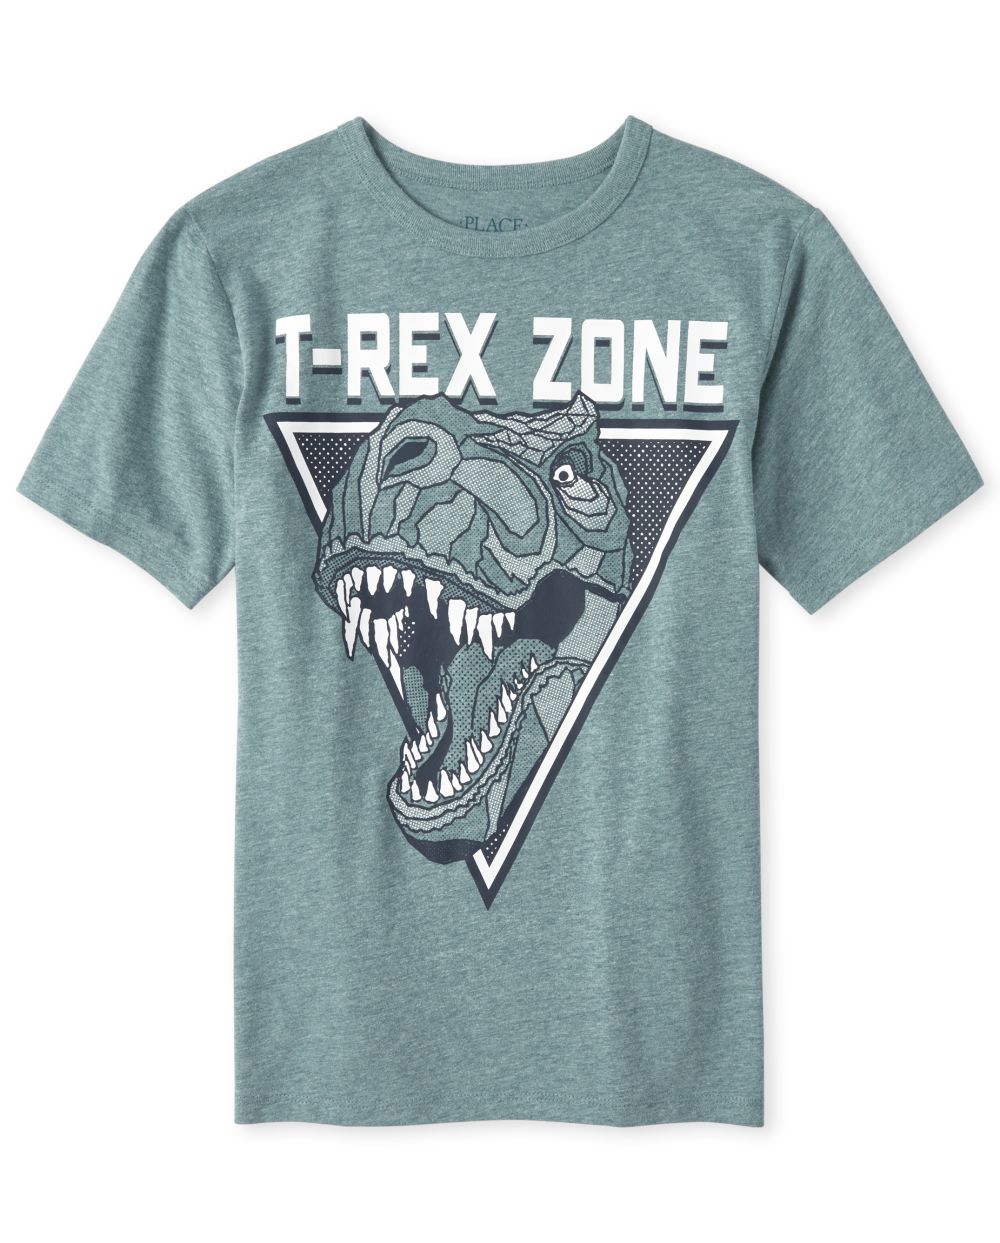 Boys Short Sleeve 'T Rex Zone' Dino Graphic Tee